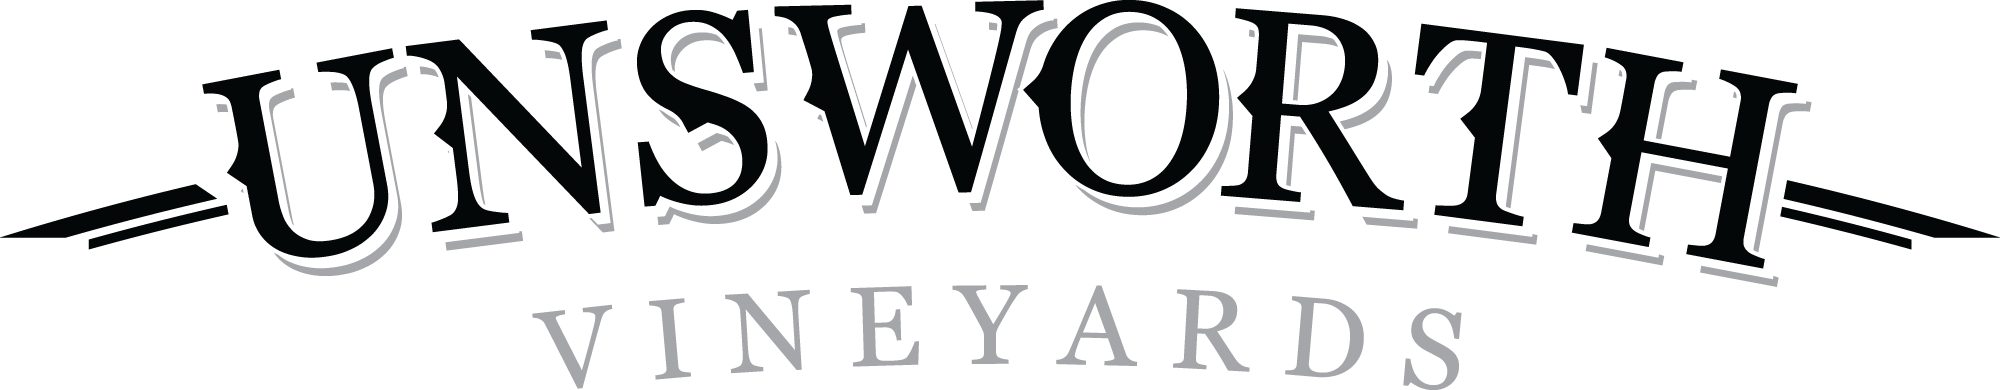 logo of unsworth vineyards